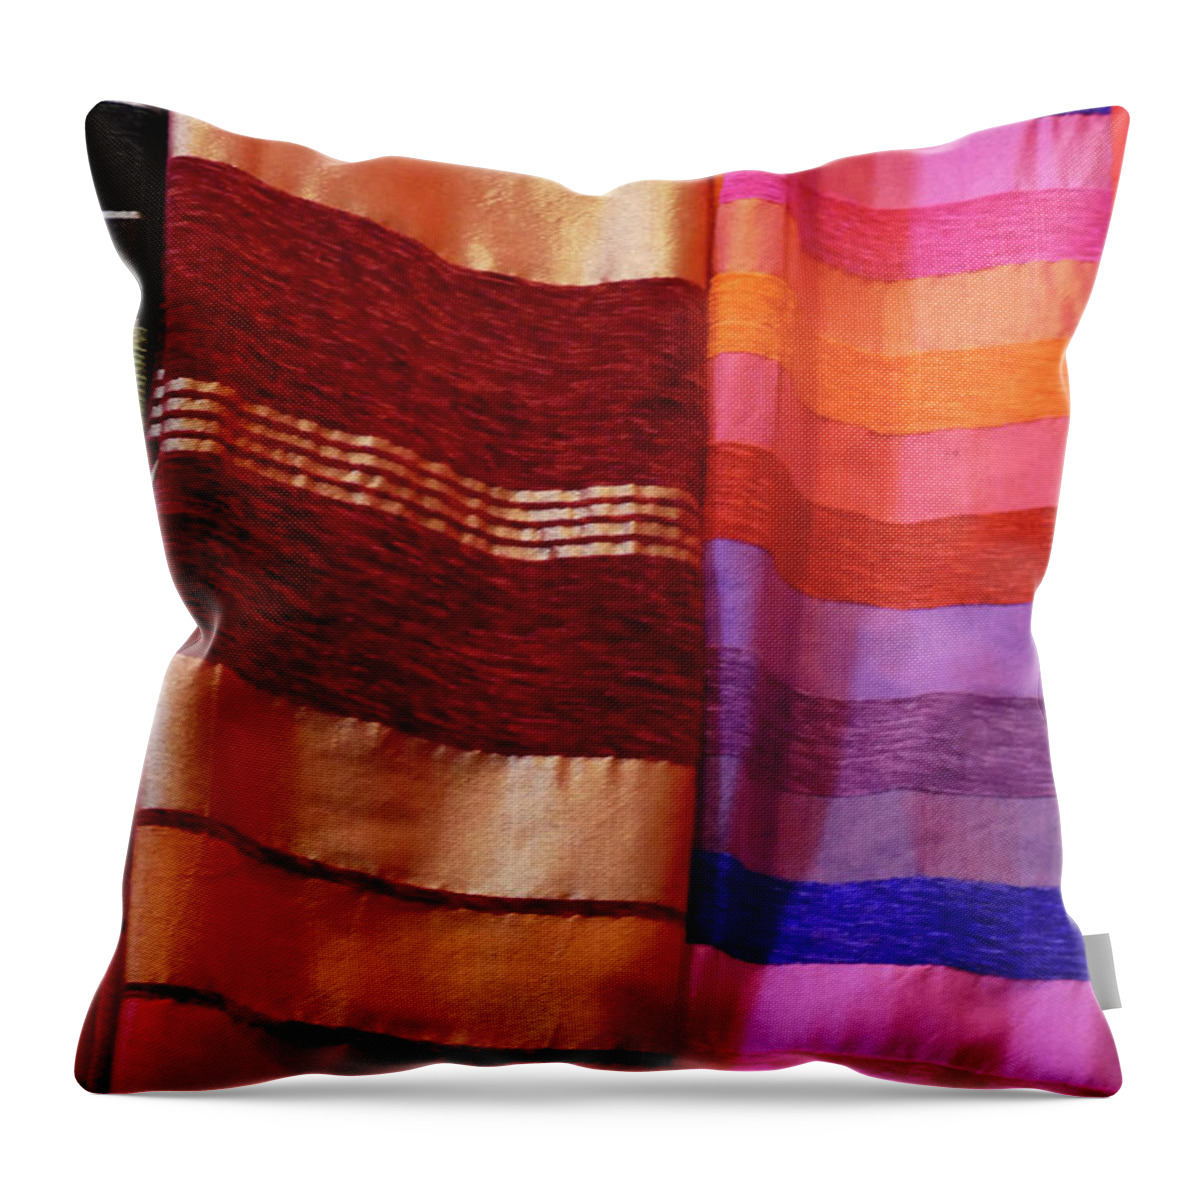 Marrakech Throw Pillow featuring the photograph Colorful fabrics in the medina market by Steve Estvanik